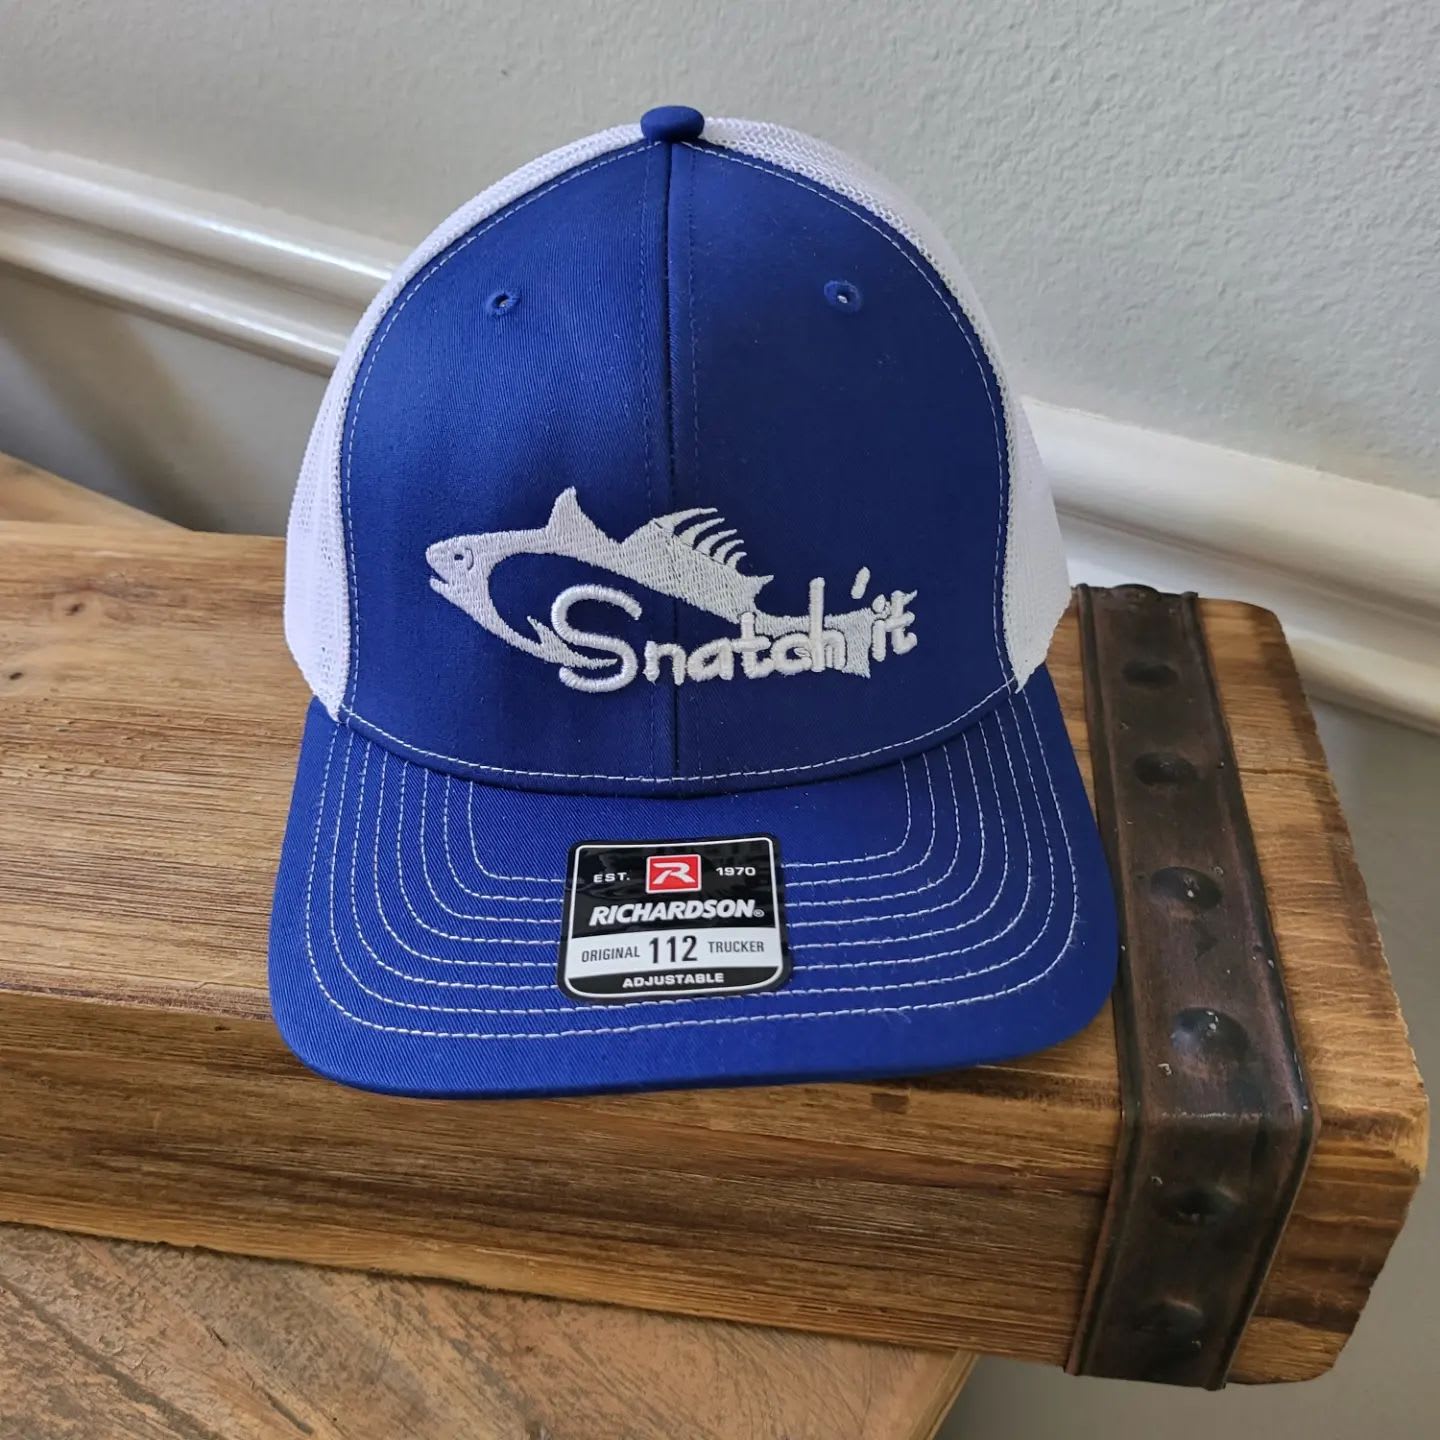 Red, Blue & White Cap - Hats - Snatch'it | Sebring Fishing Apparel |  Premium Fishing Gear